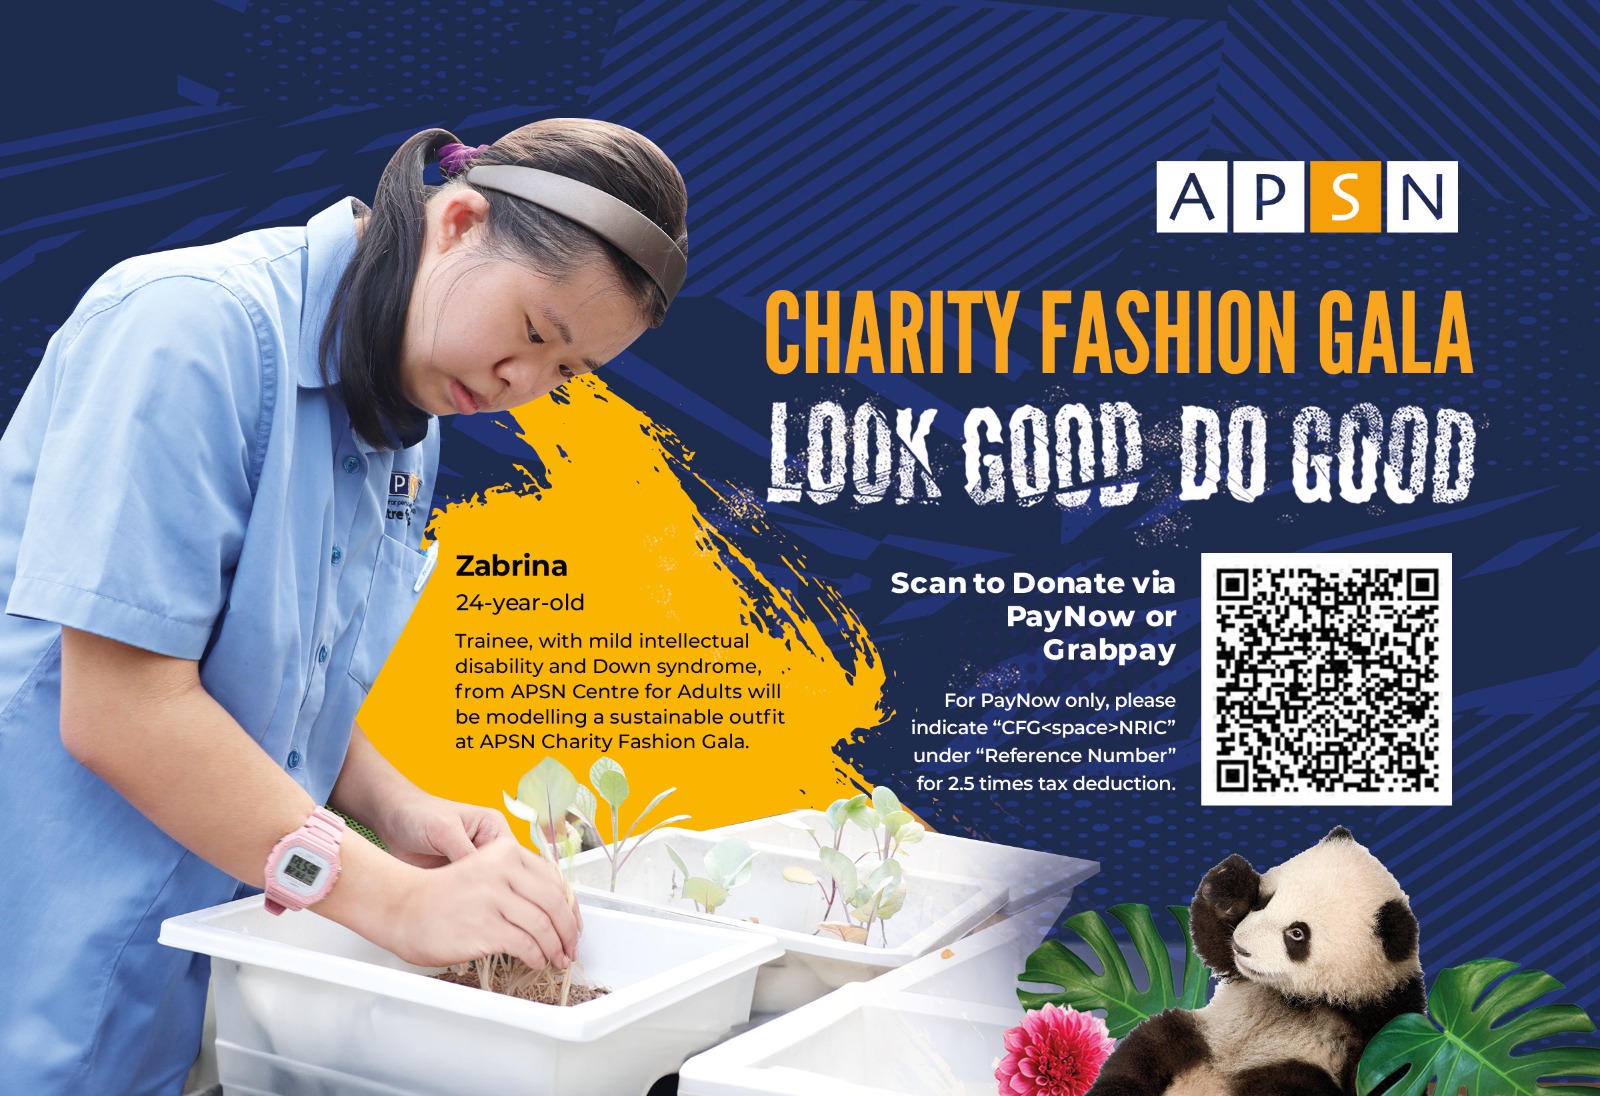 APSN Charity Fashion Gala